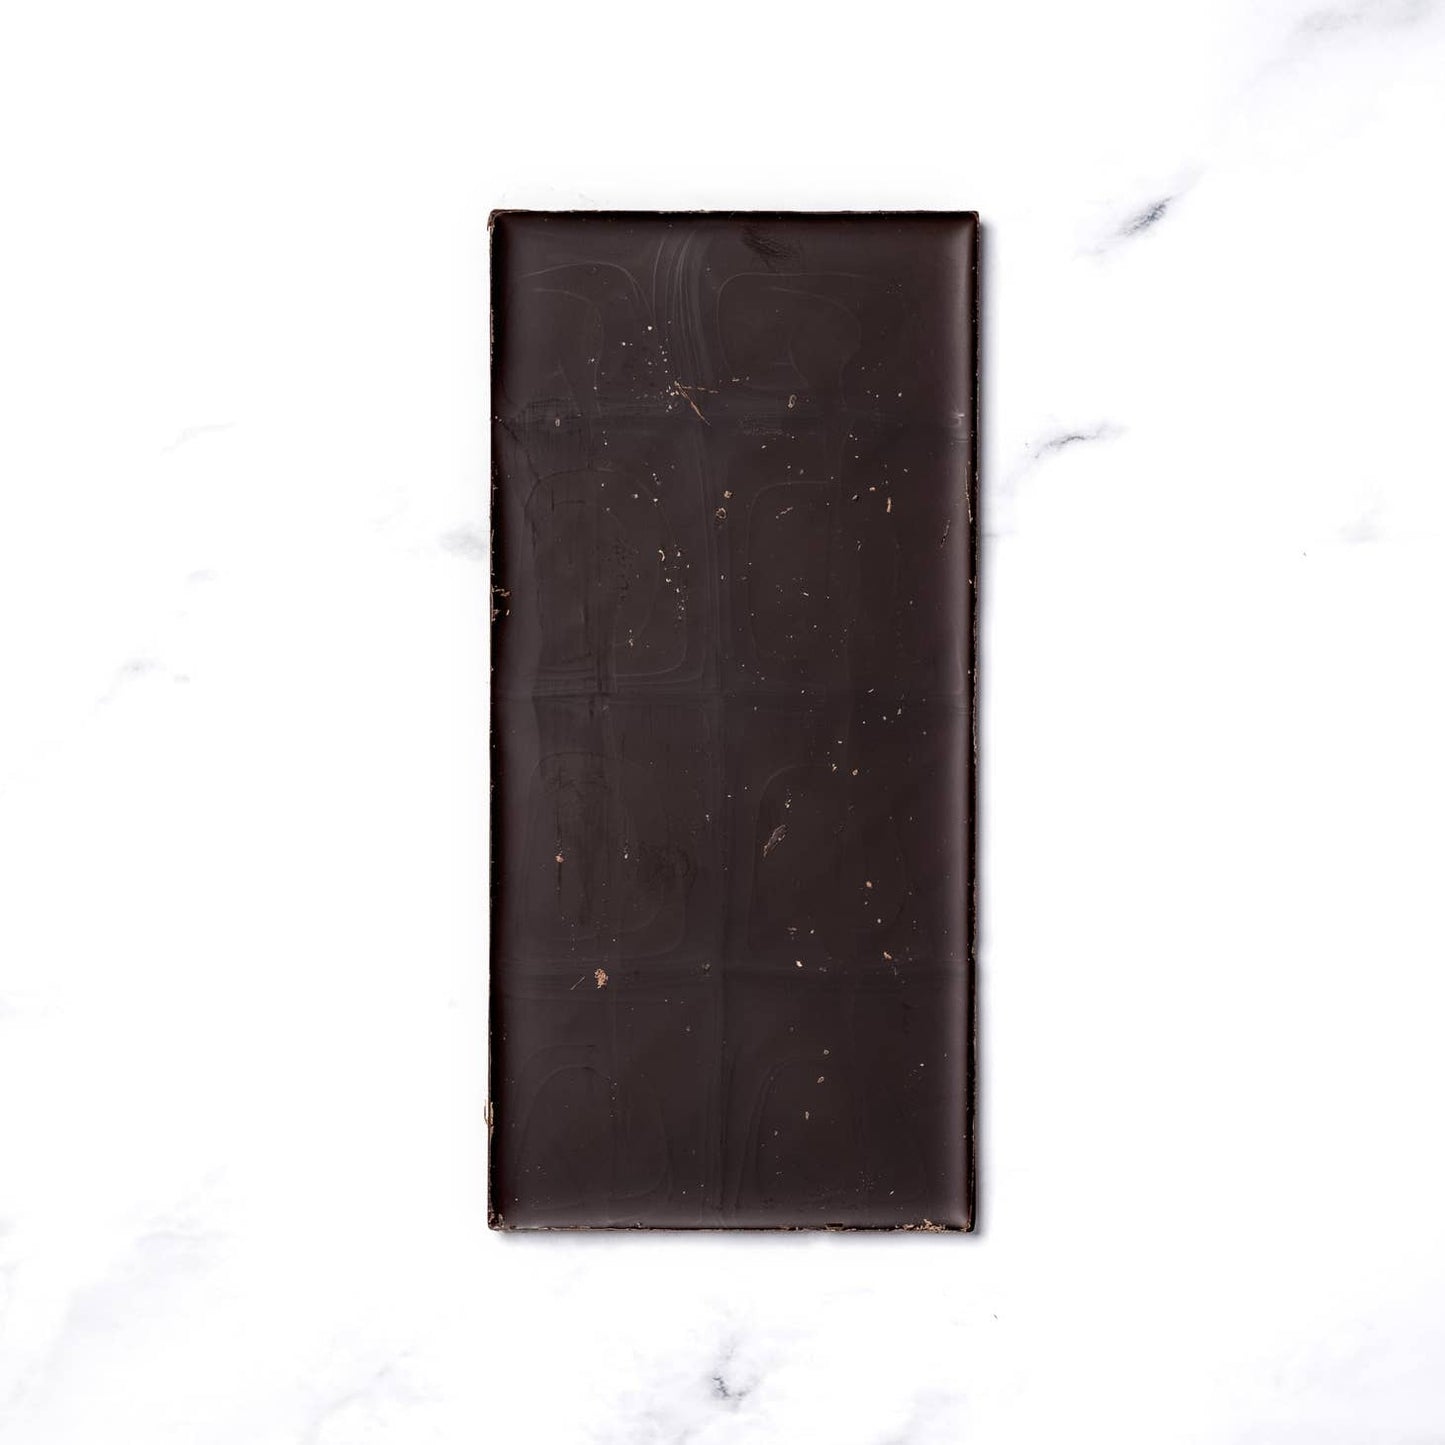 Ritual Chocolate - Ecuador Camino Verde  70% Cacao